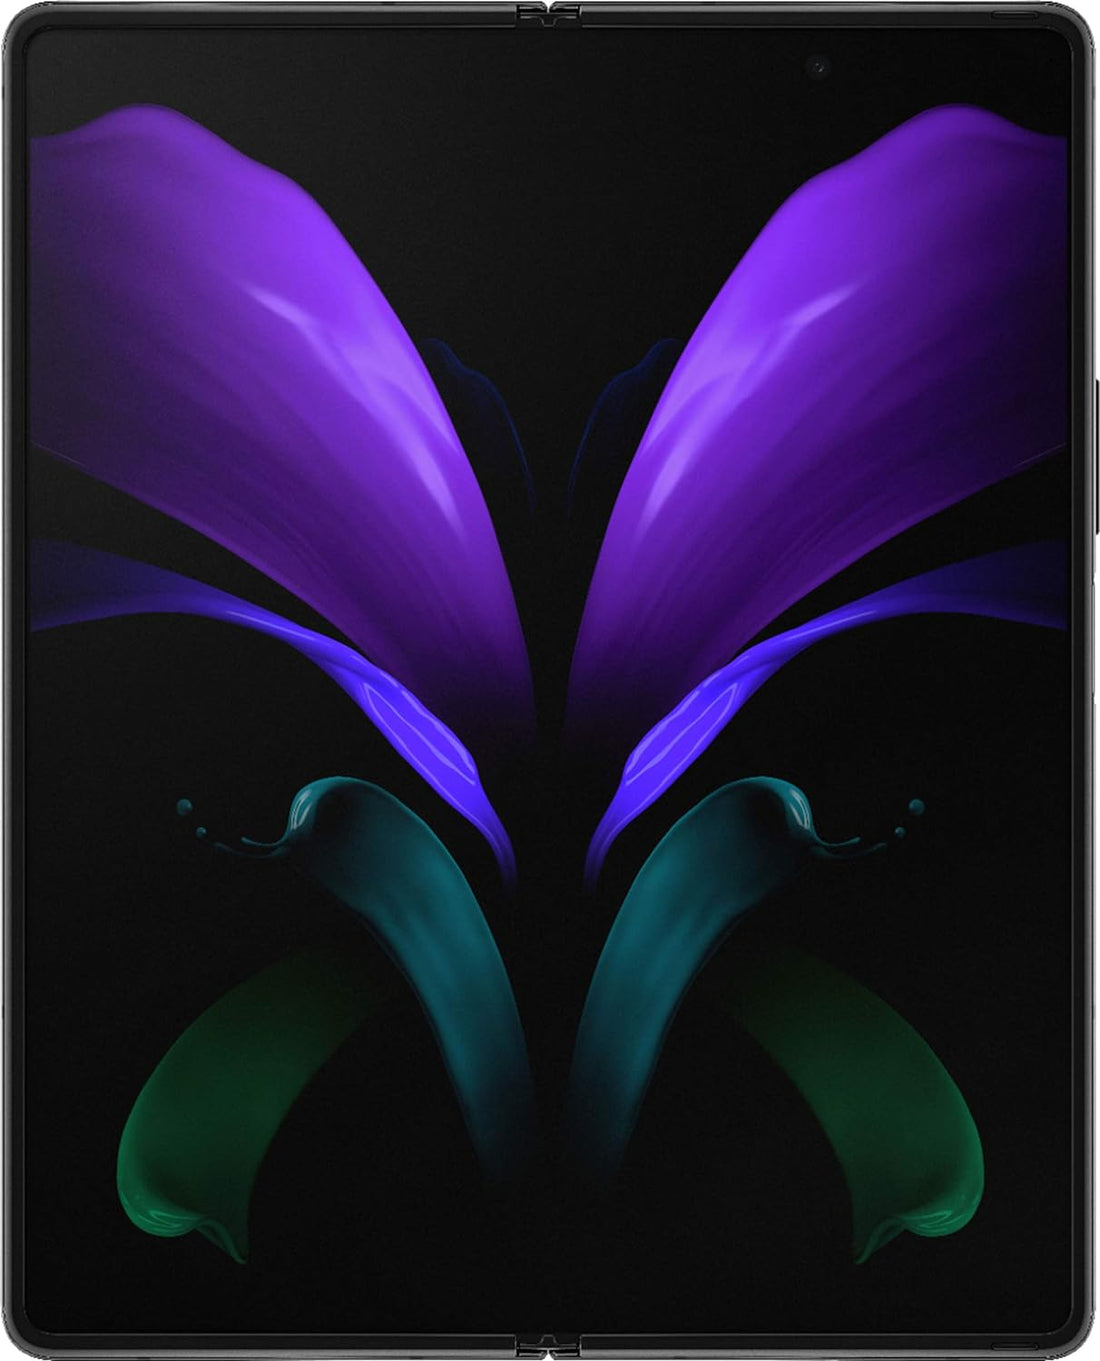 Samsung Galaxy Z Fold2 5G 256GB (AT&amp;T) - Mystic Black (Pre-Owned)